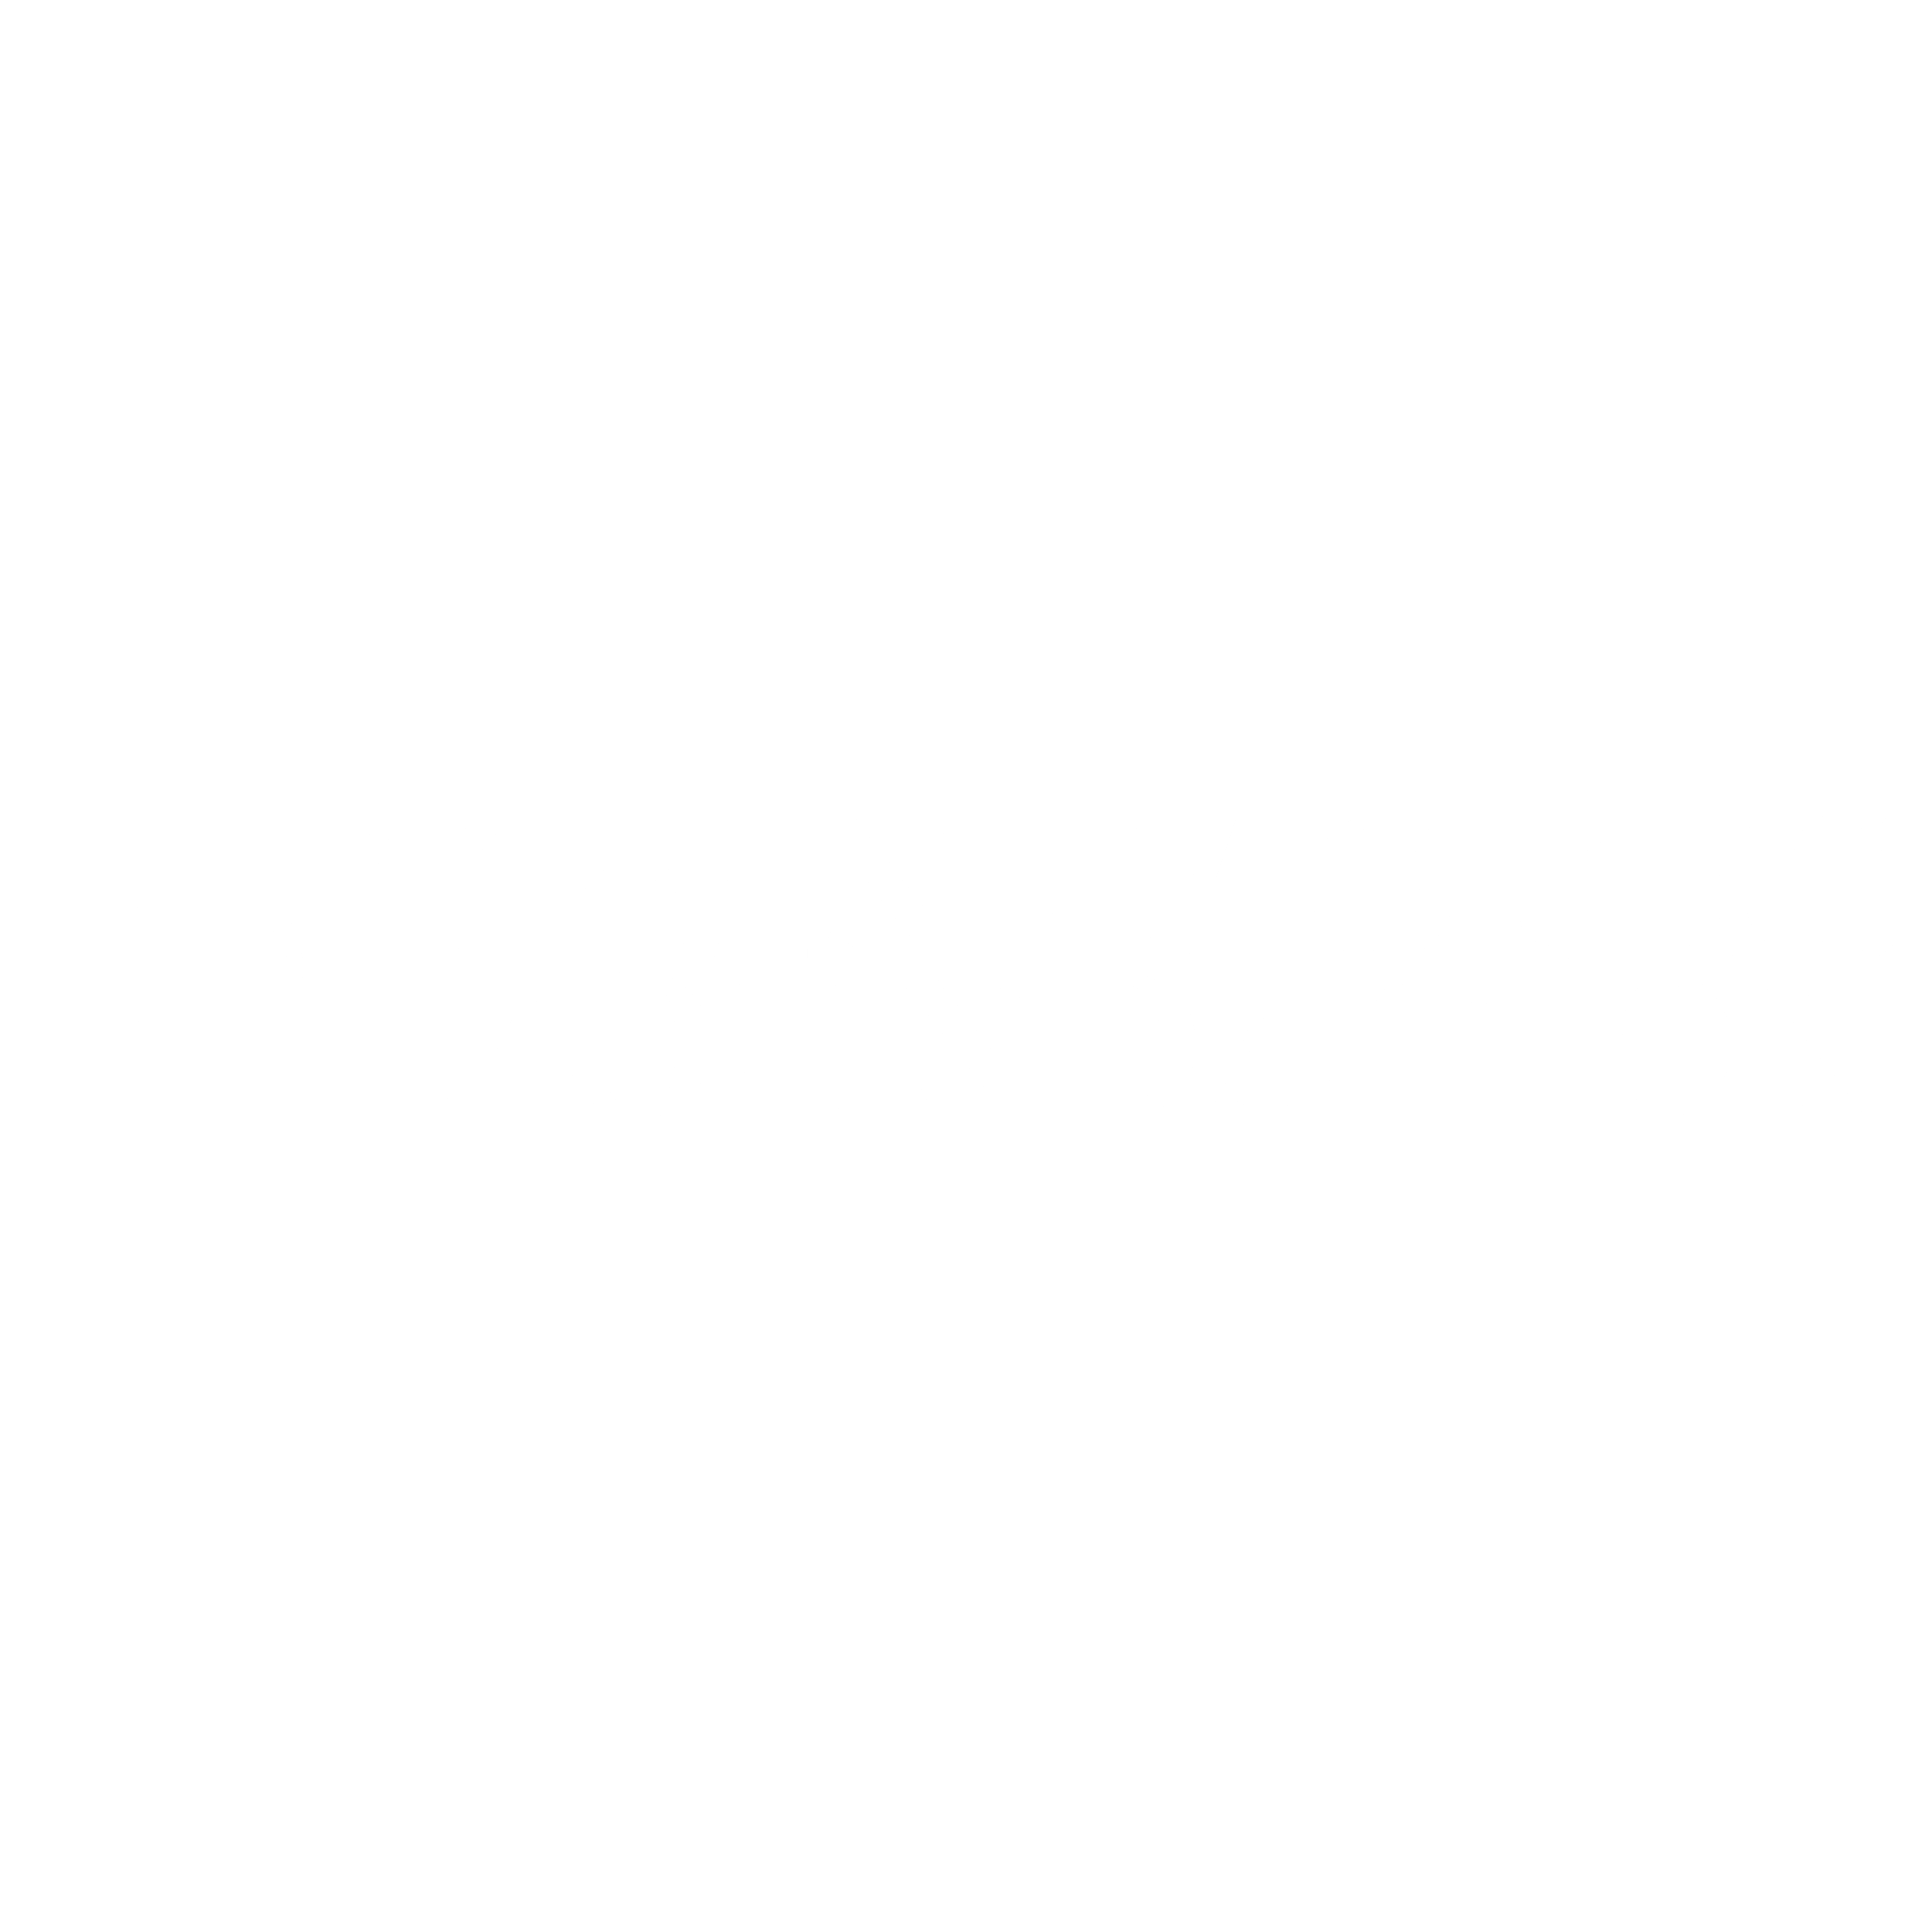 Nemours Logo - The Nemours Foundation Logo PNG Transparent & SVG Vector